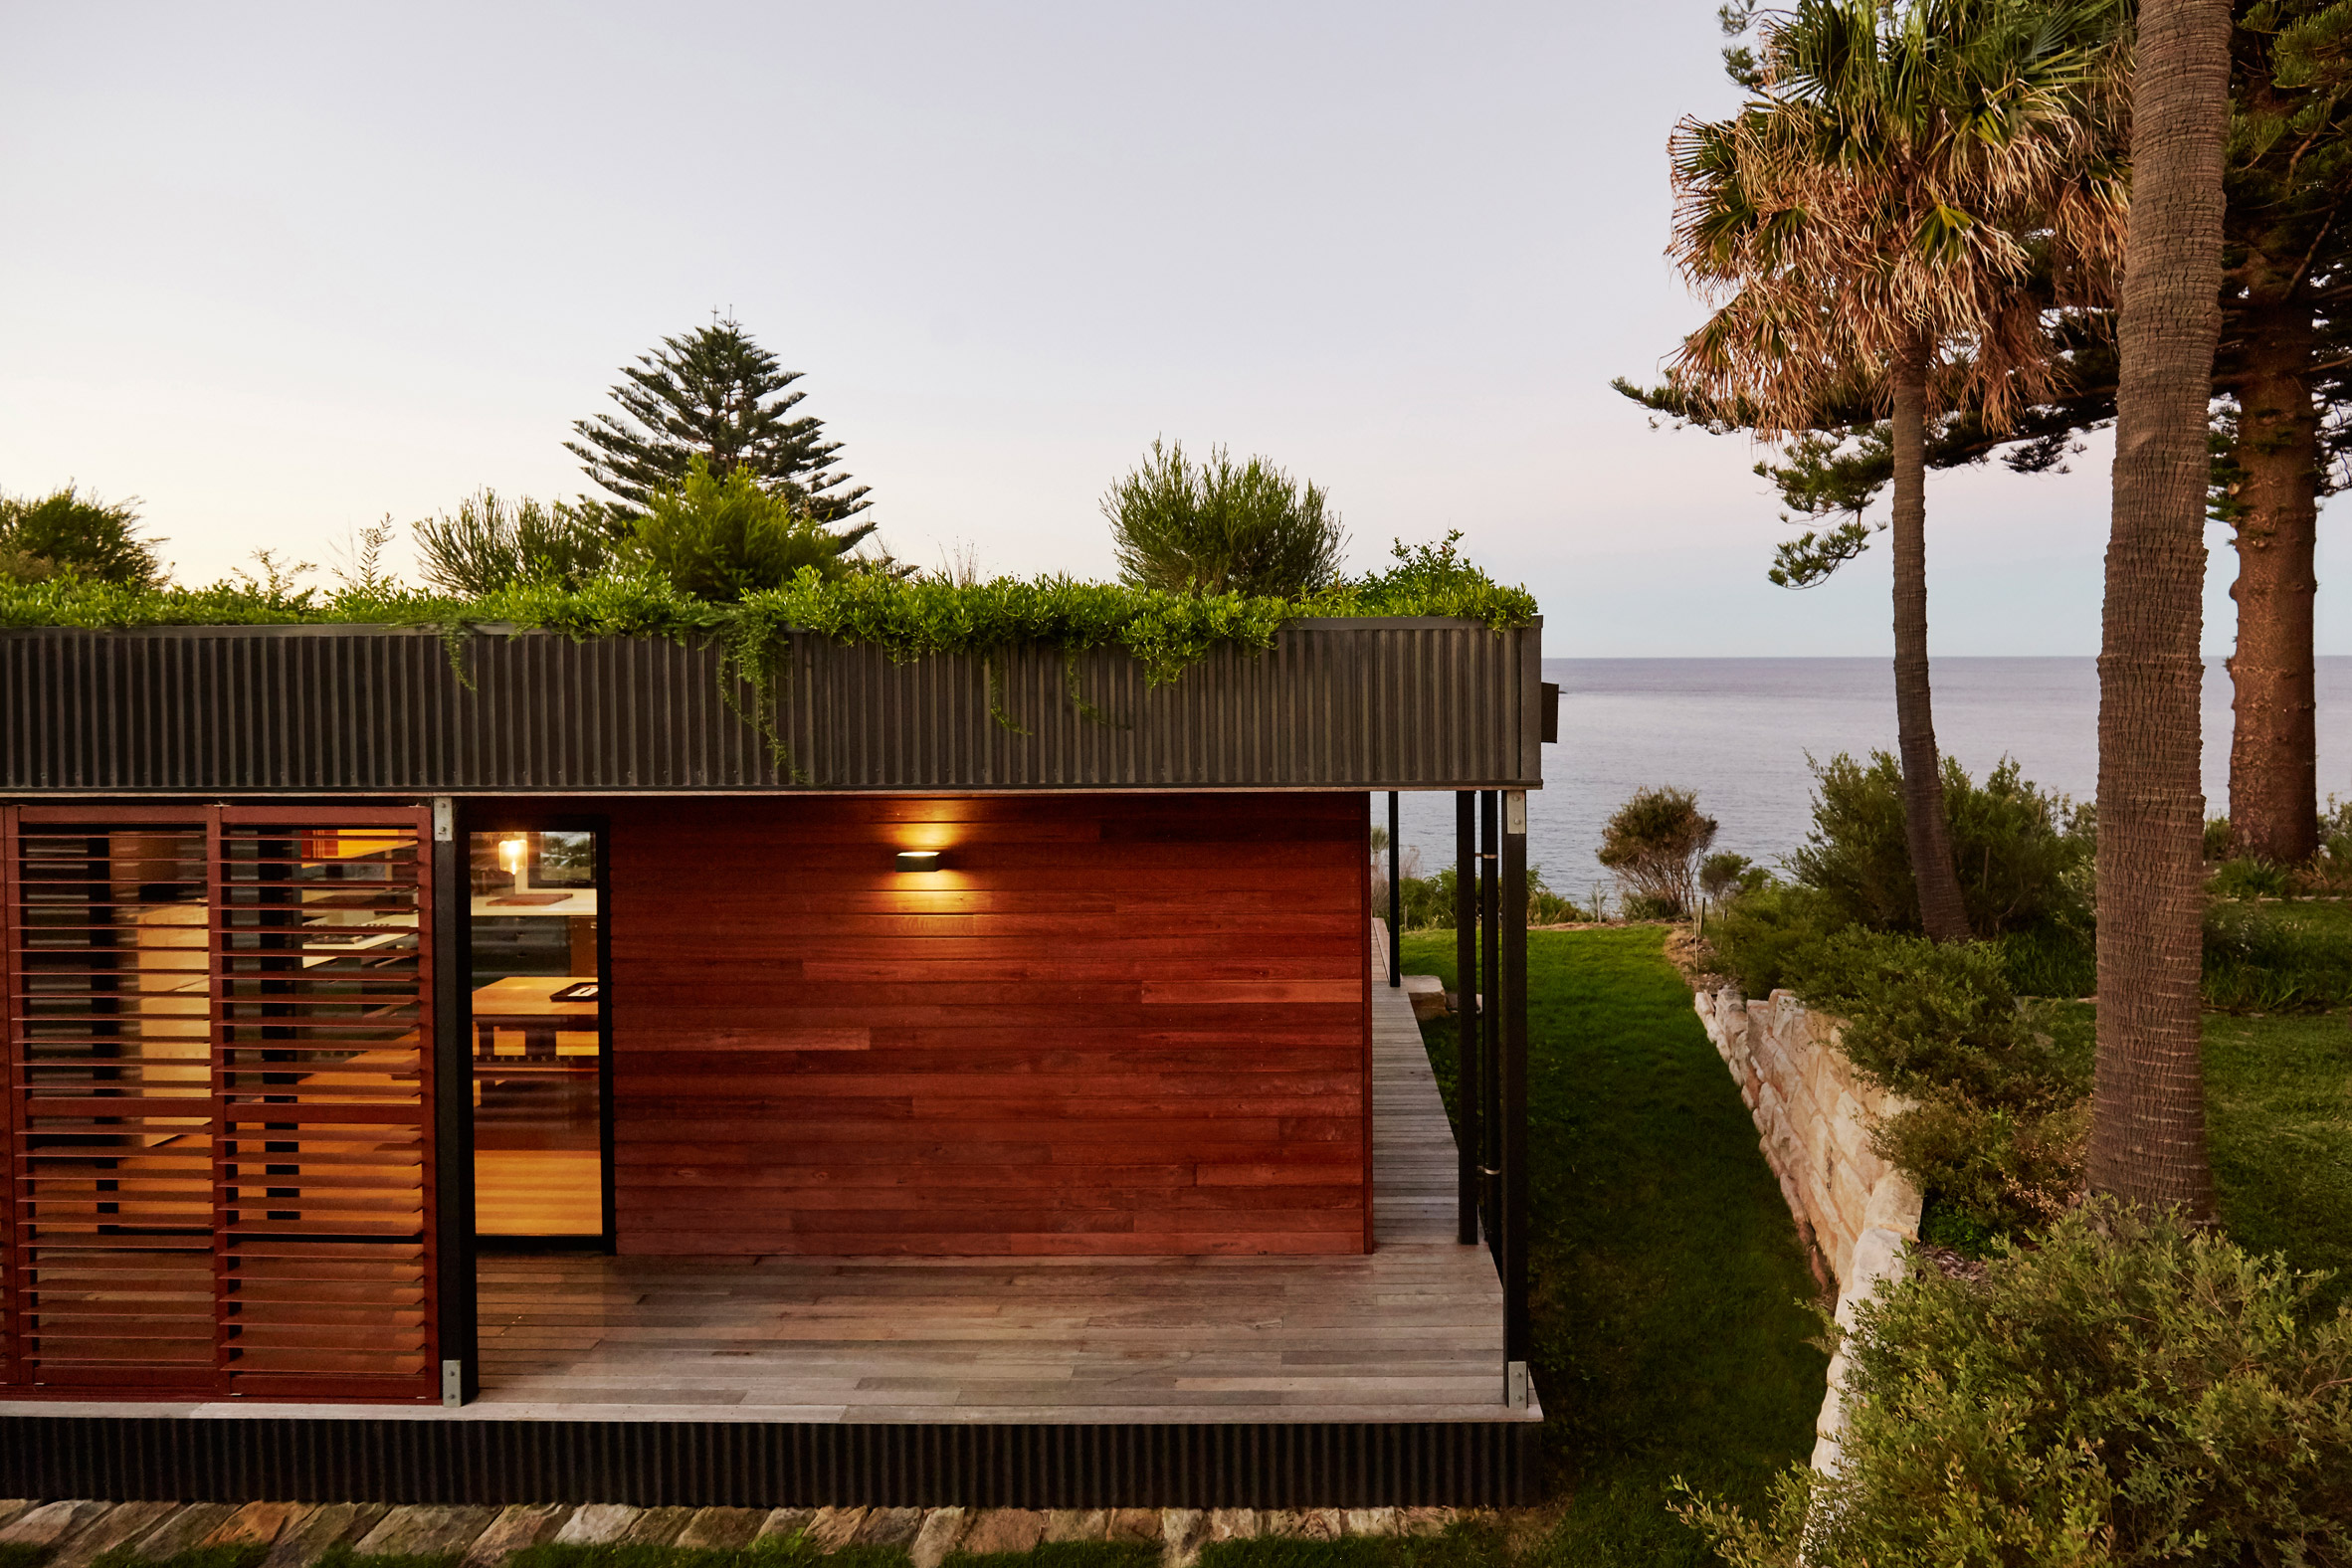 ArchiBlox creates garden roof for house overlooking a beach in Australia